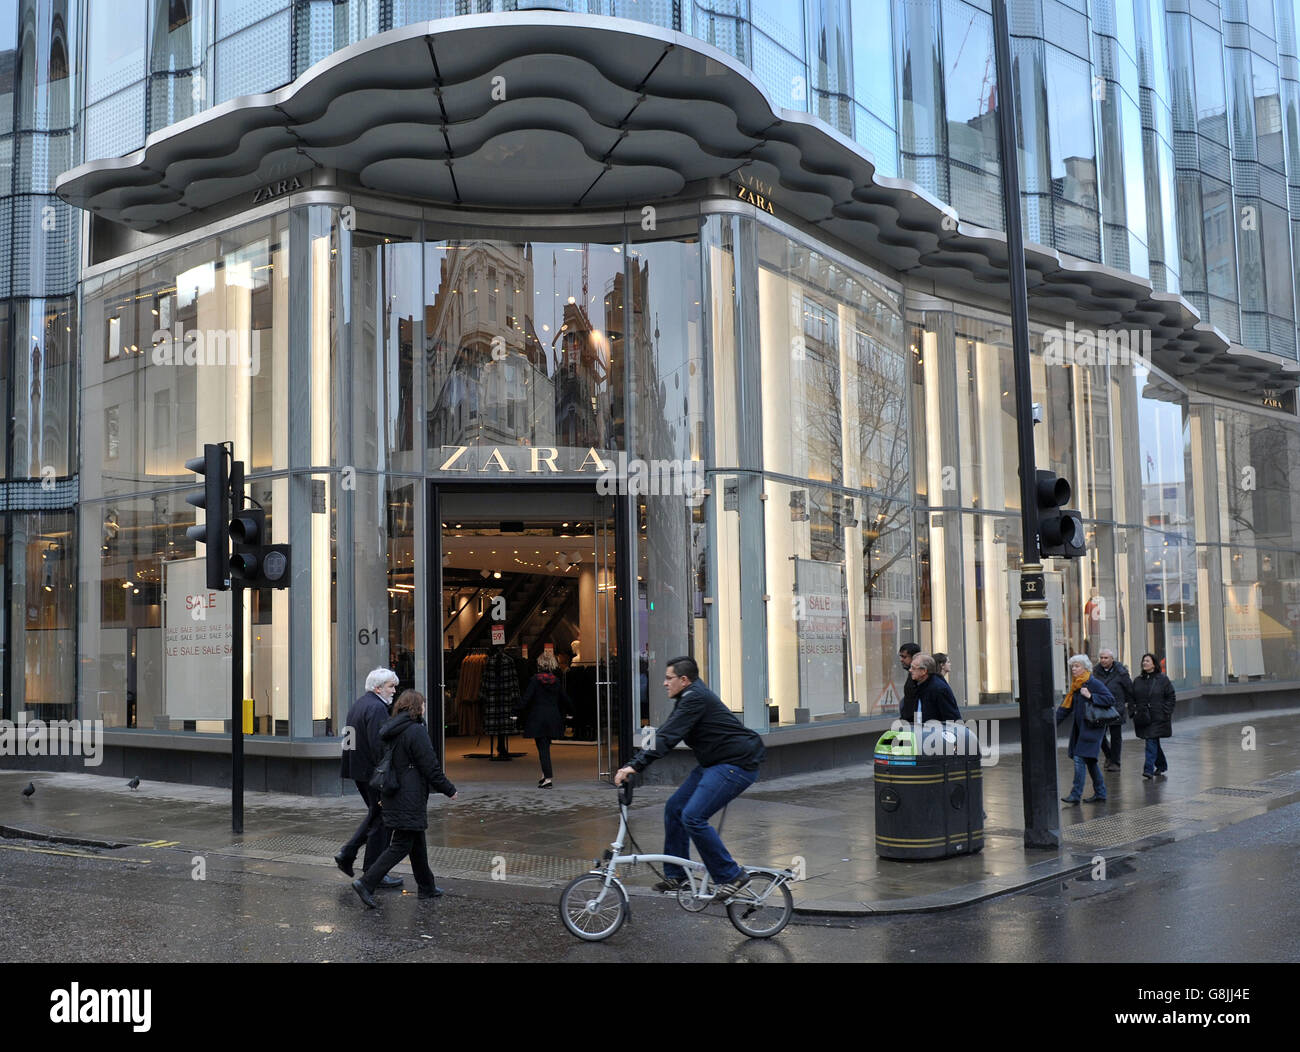 The Zara store in Oxford Street, central London Stock Photo - Alamy